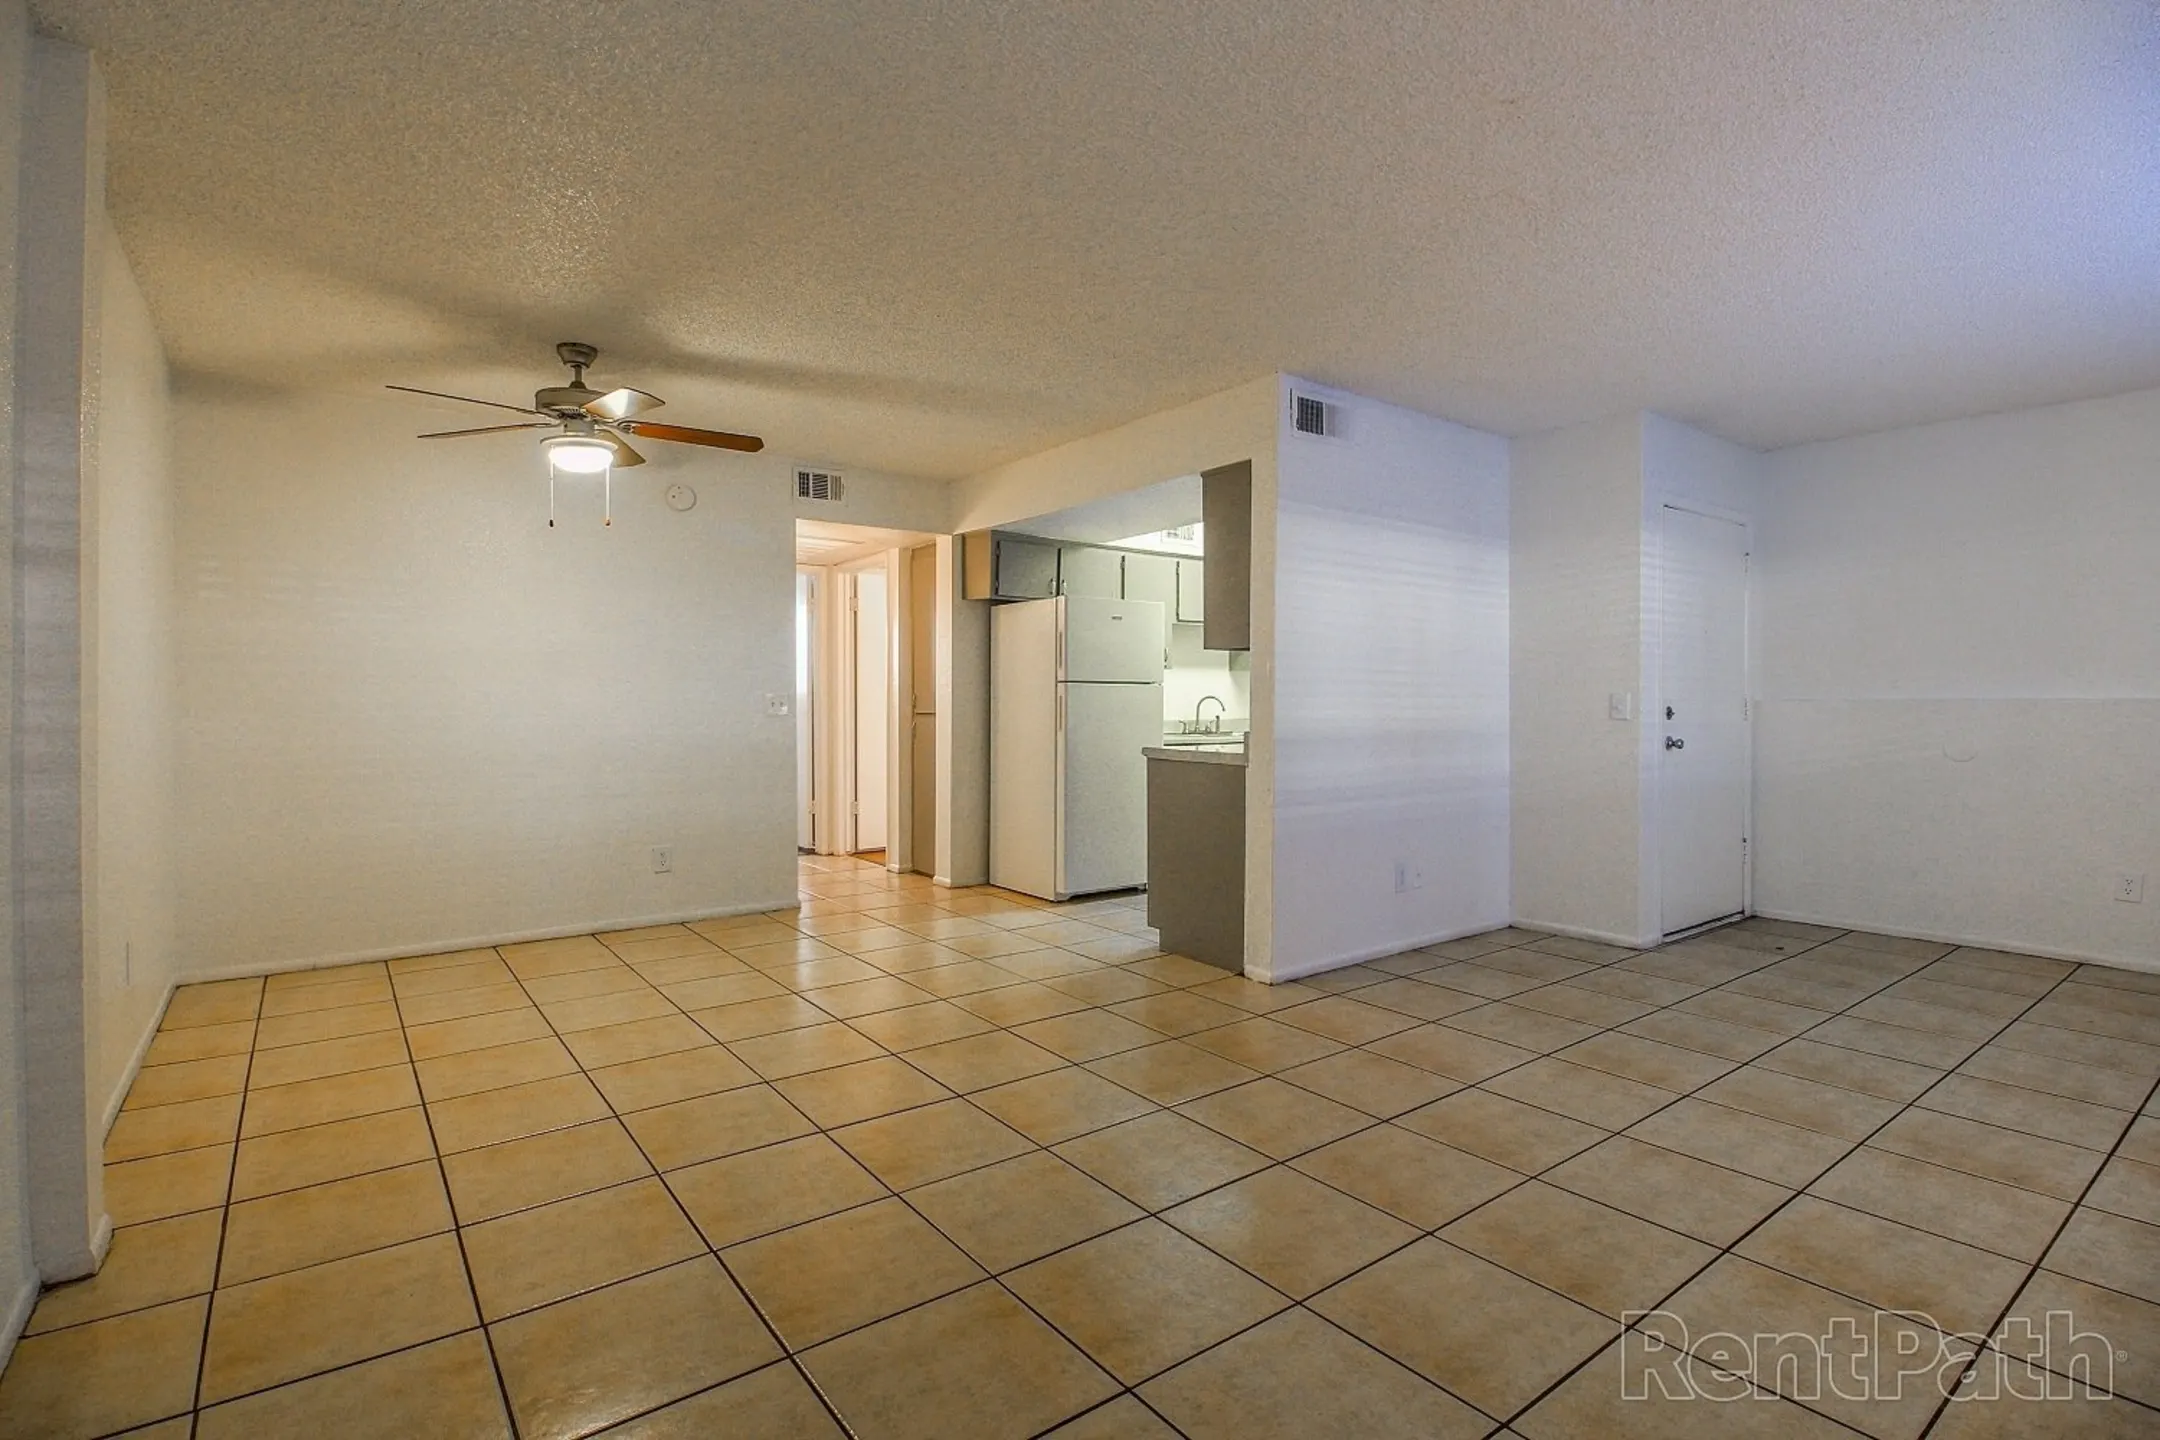 Living Room - New Horizons Apartments - Phoenix, AZ